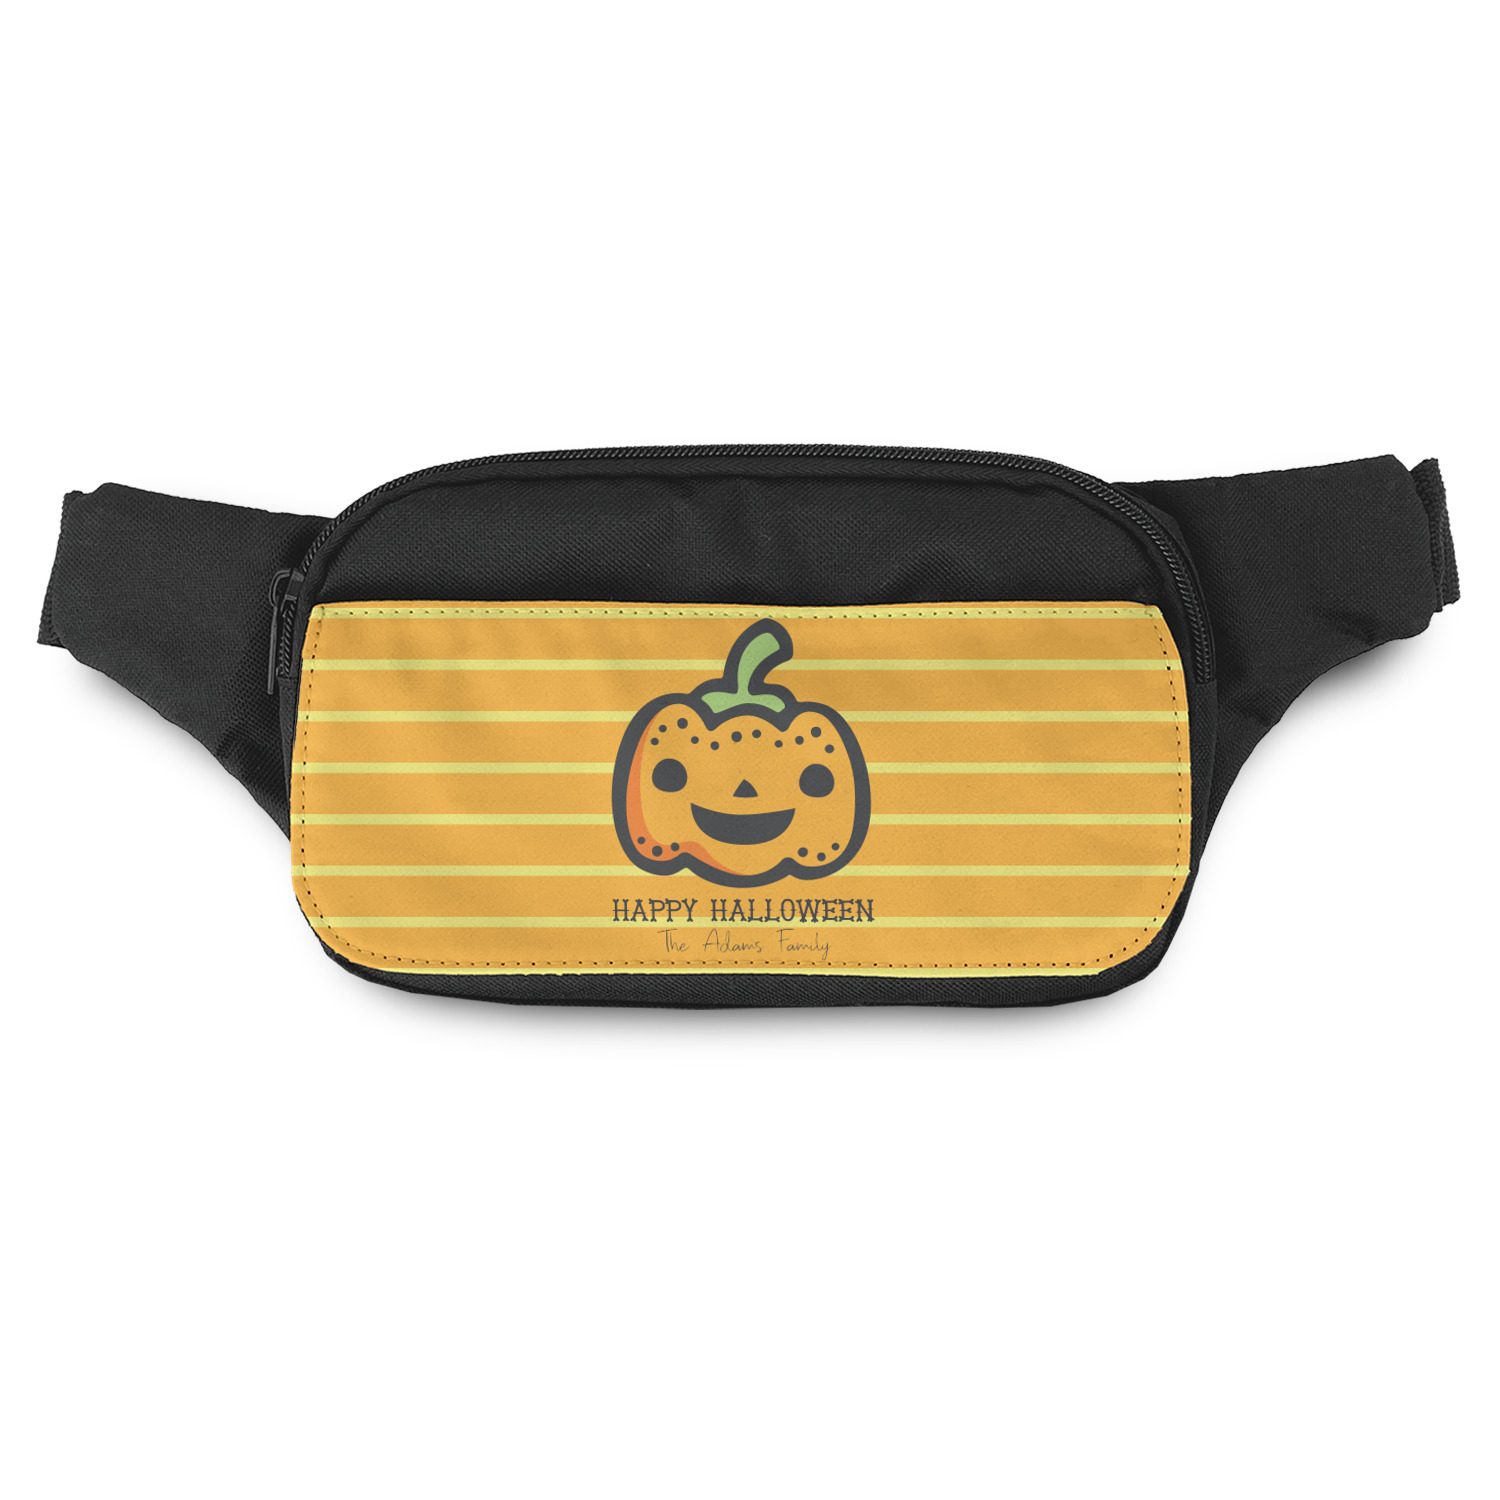 YouCustomizeIt Halloween Pumpkin Duffel Bag Personalized 